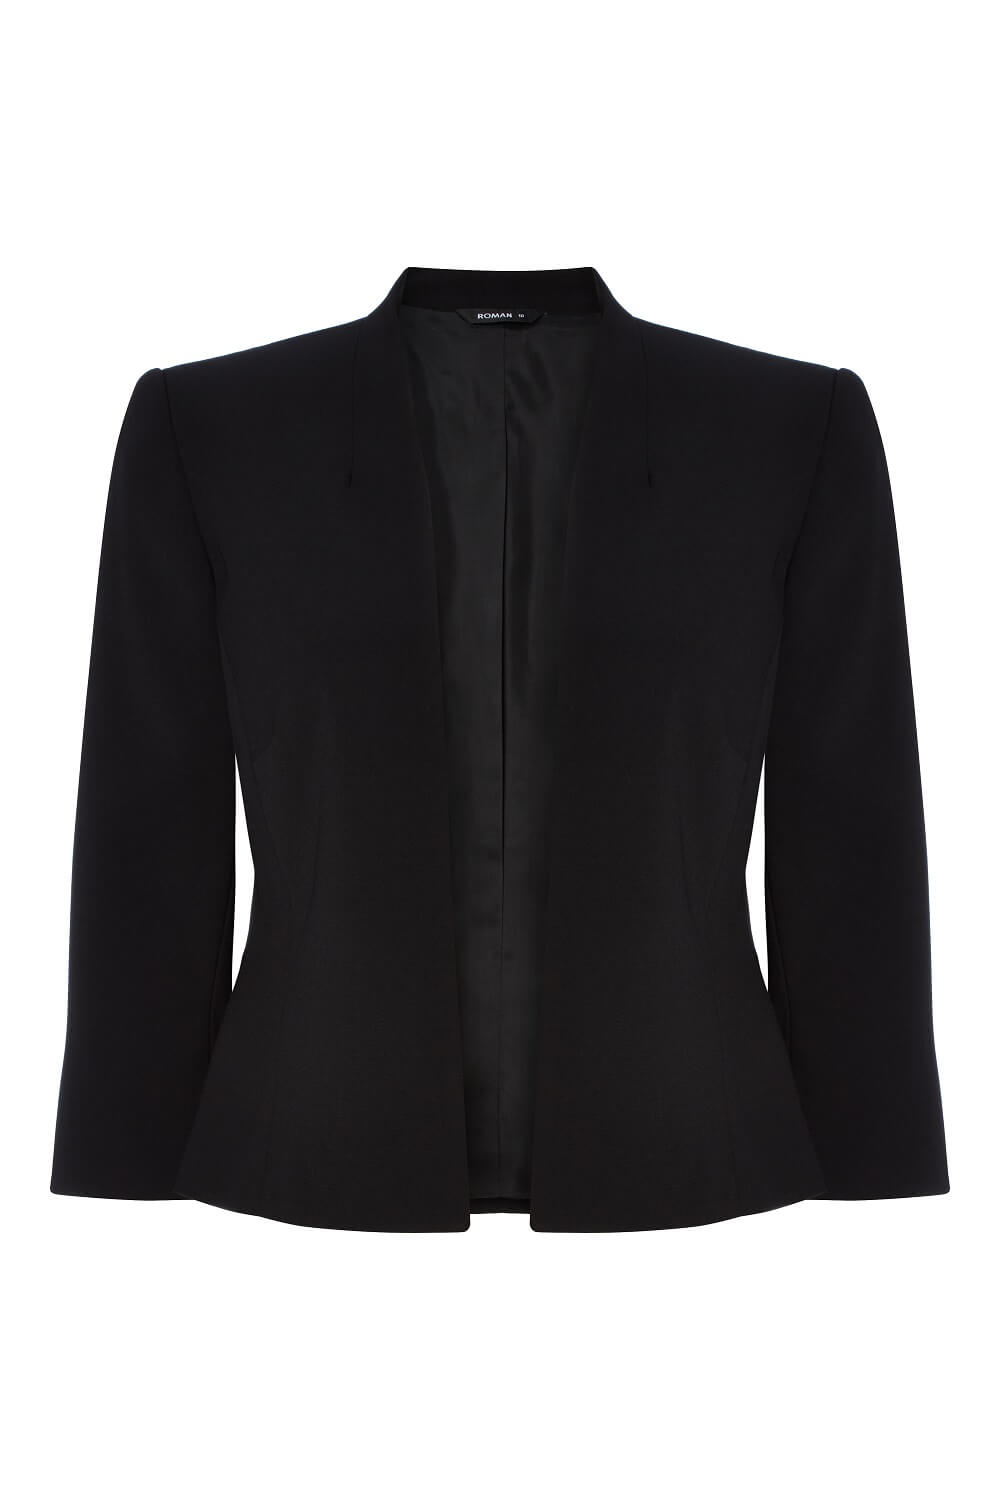 Rochette Smart Jacket in Black - Roman Originals UK